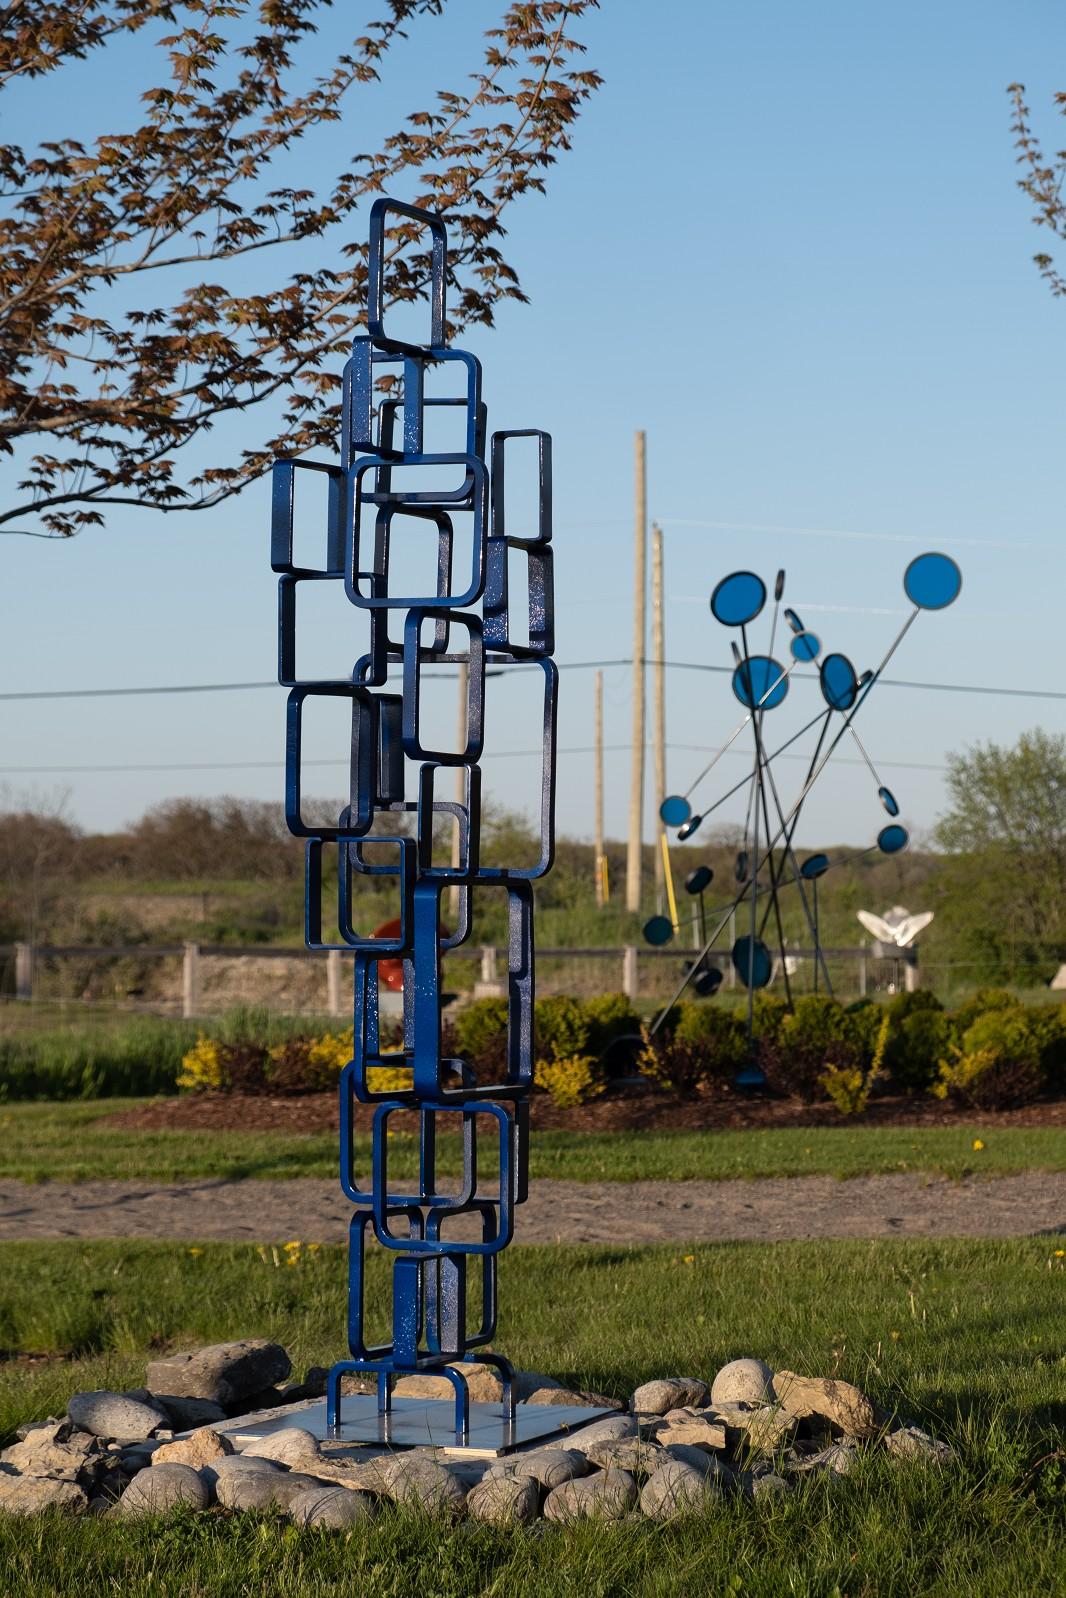 Frame - tall, blue, outdoor, painted steel, geometric abstract sculpture - Abstract Geometric Sculpture by Ryan Van Der Hout